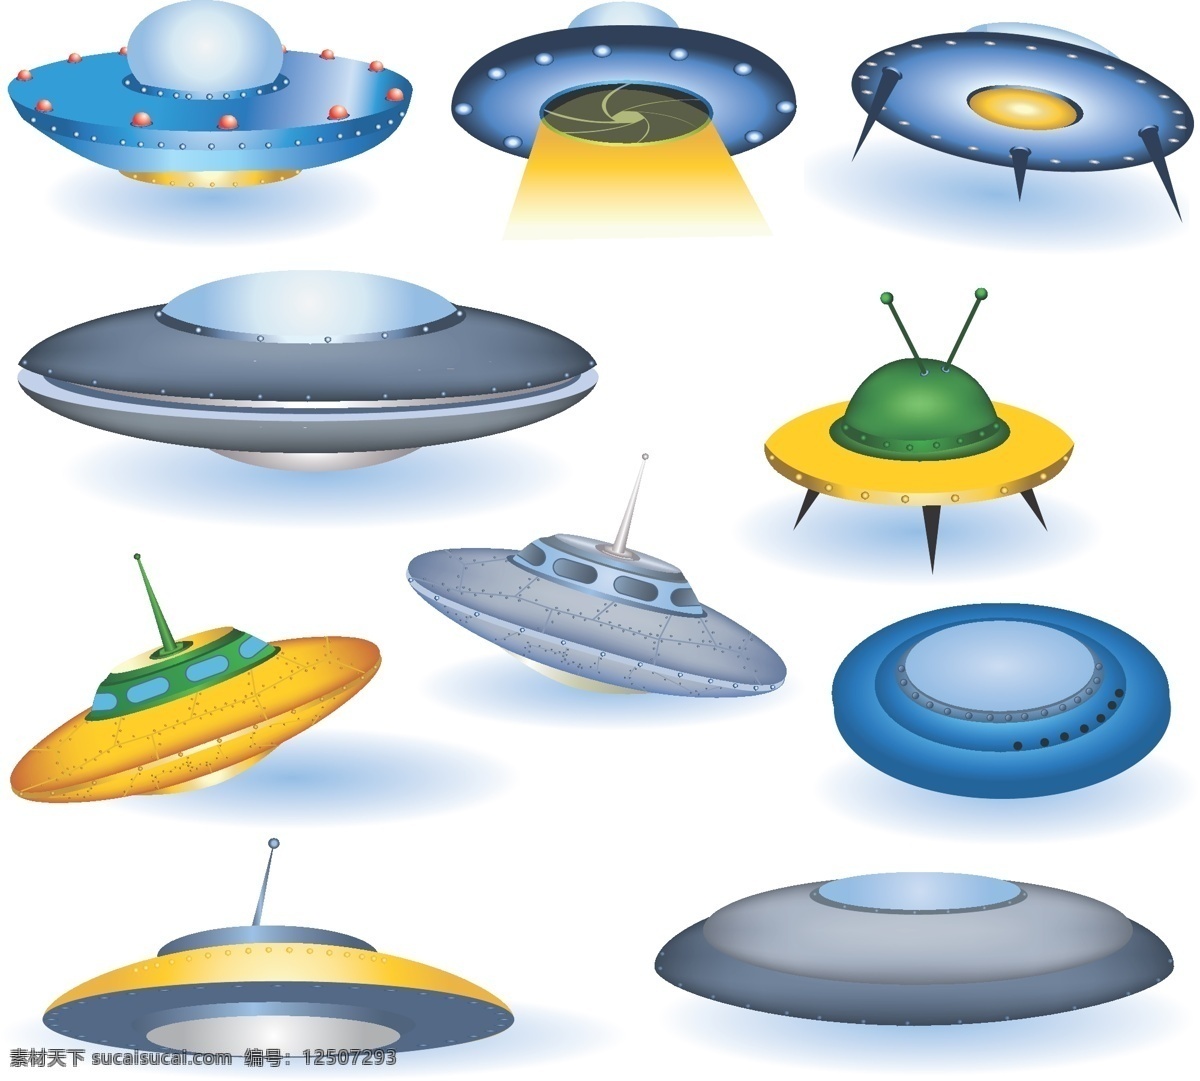 ufo 飞碟 矢量图 宇宙飞船 飞碟设计 太空飞行器 其他矢量图